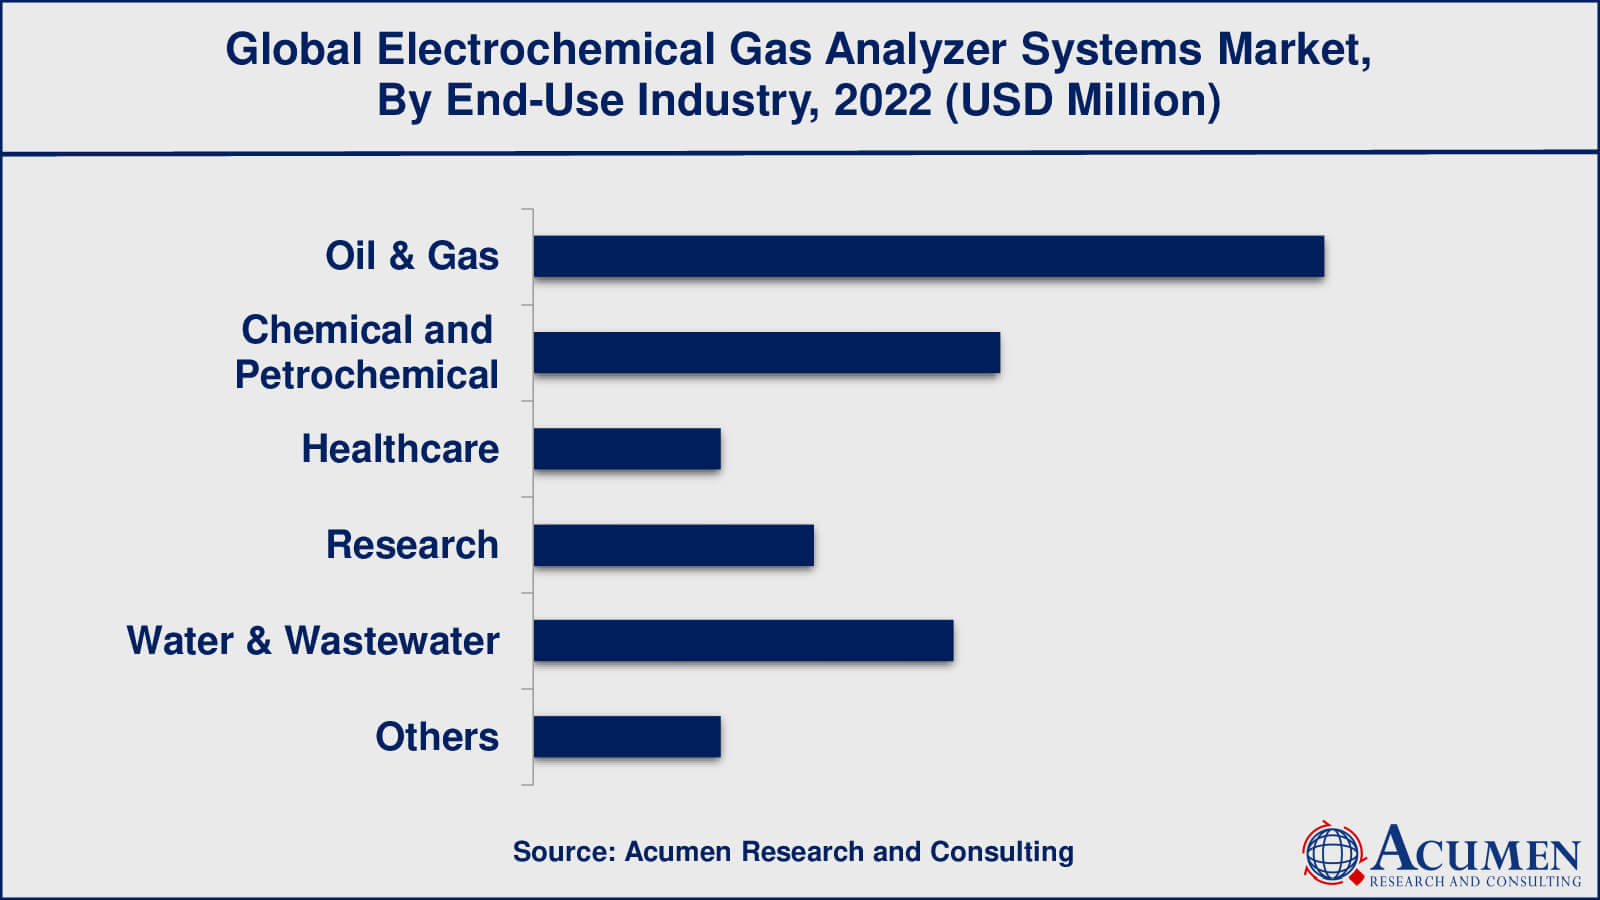 Electrochemical Gas Analyzer Systems Market Insights